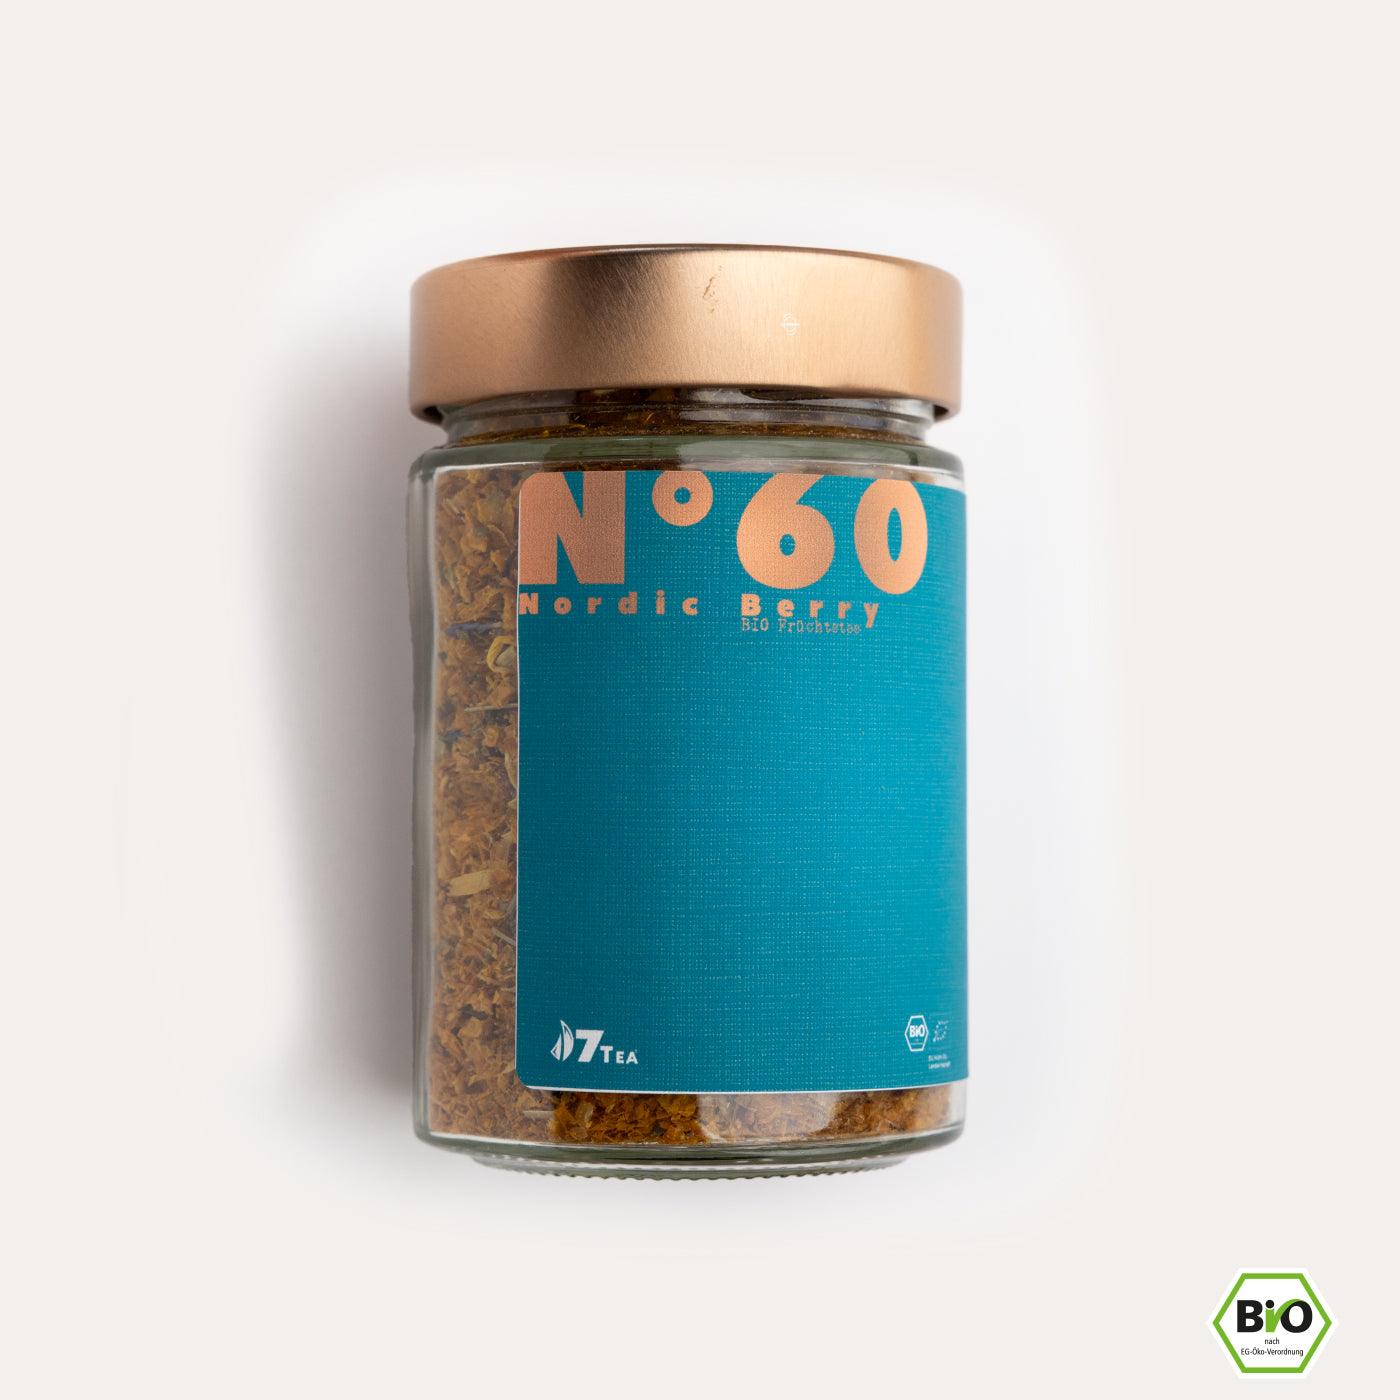 N°60 | Nordic Berry - 7Tea® Bio-Tee Onlineshop